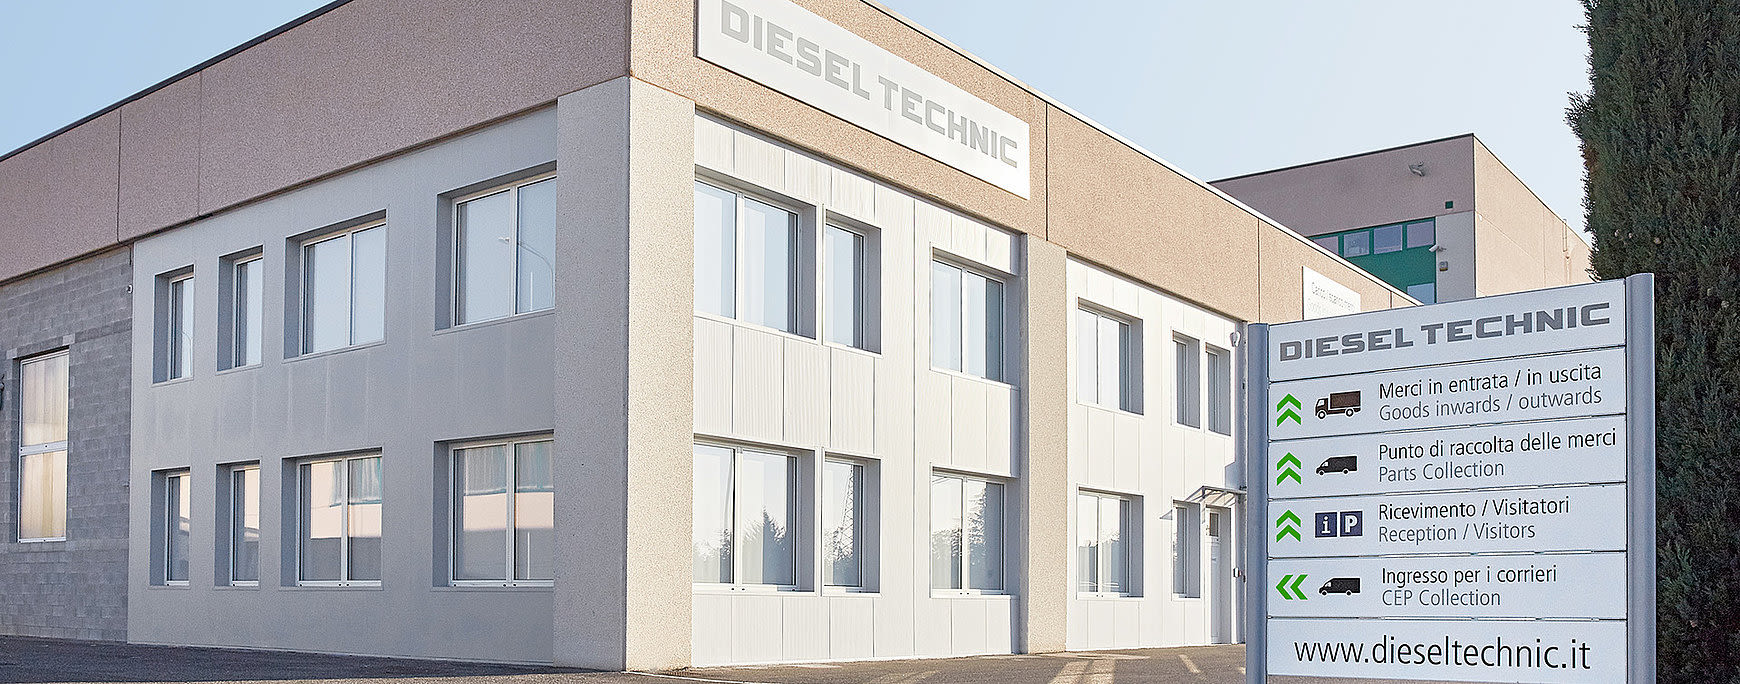 Diesel Technic Italia S.r.l.